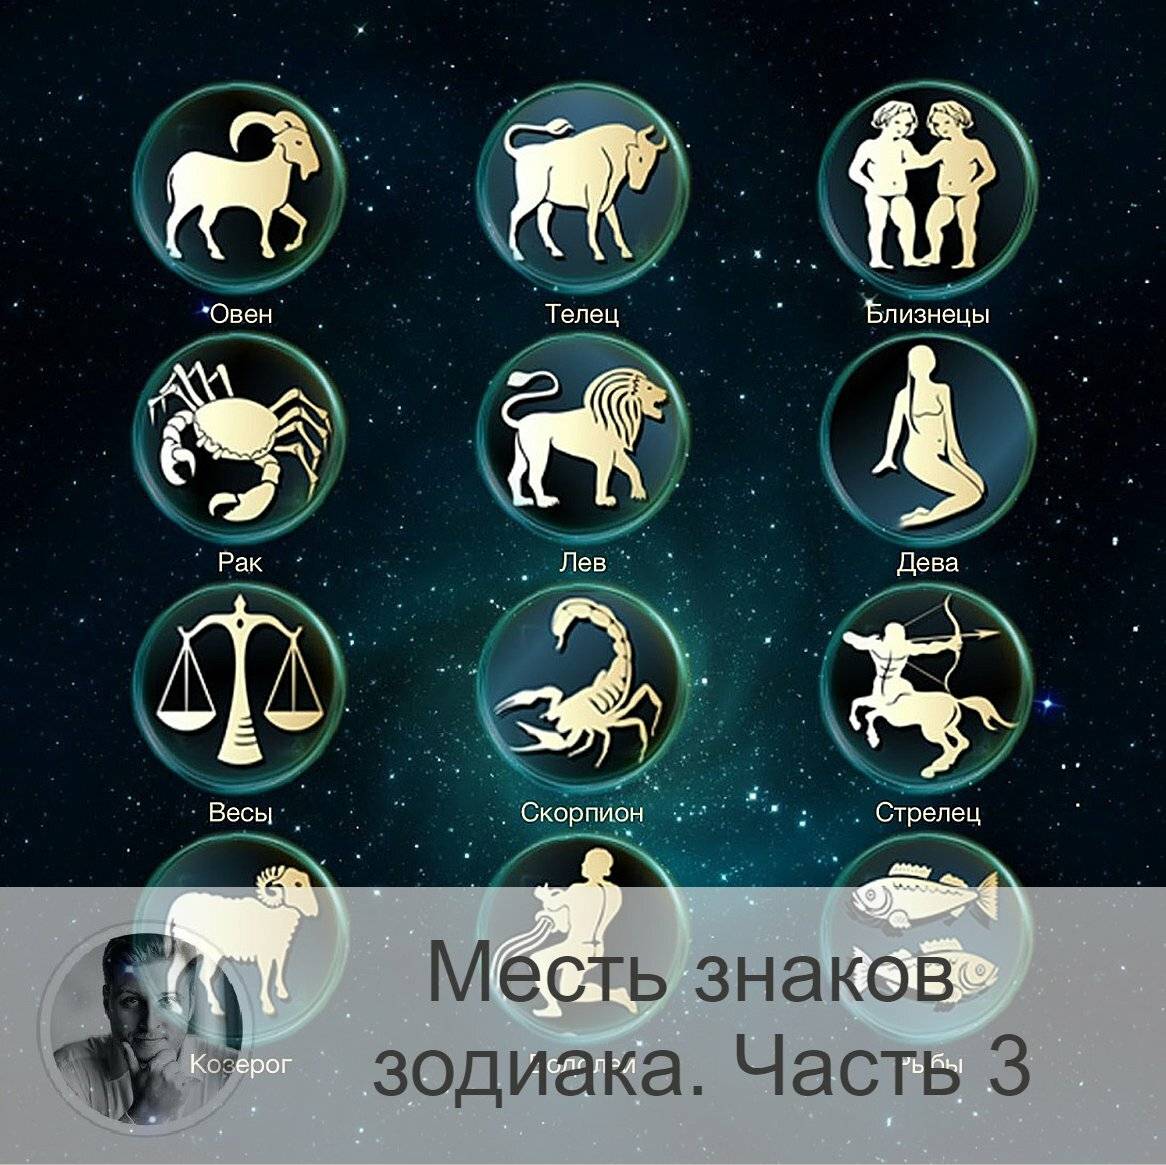 Дома в астрологии и их влияние | астролог дмитрий харон